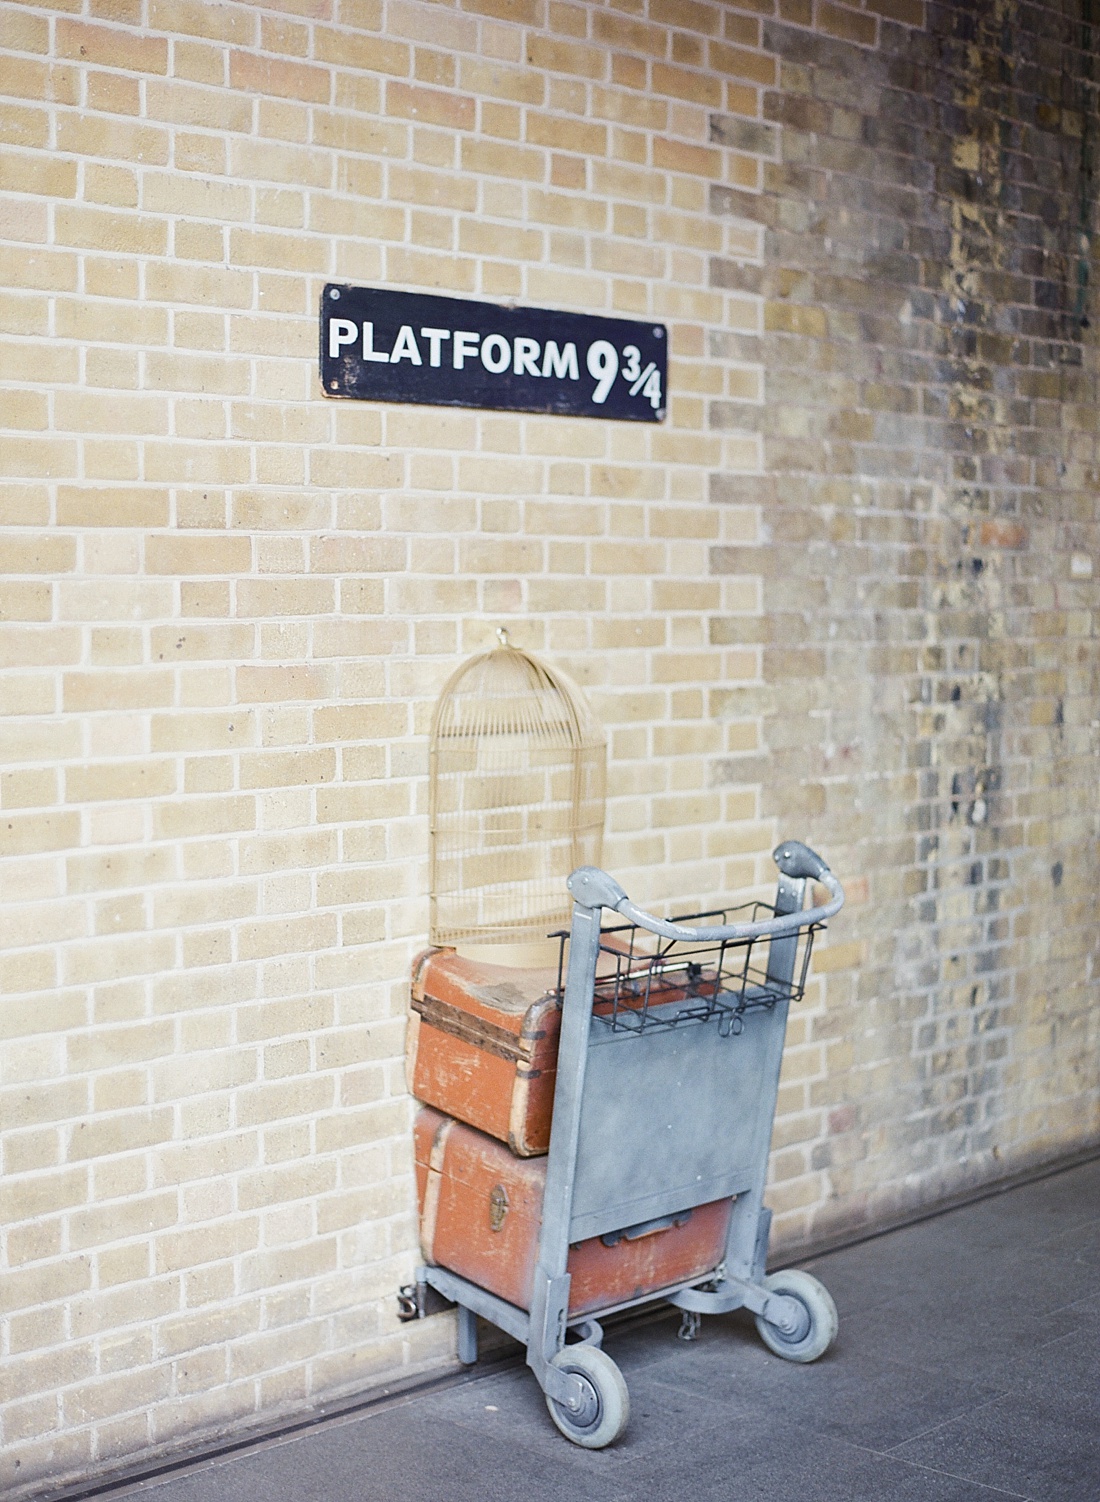 Platform 9 3/4 at King's Cross in London, England | Fine art travel photographer Abby Grace